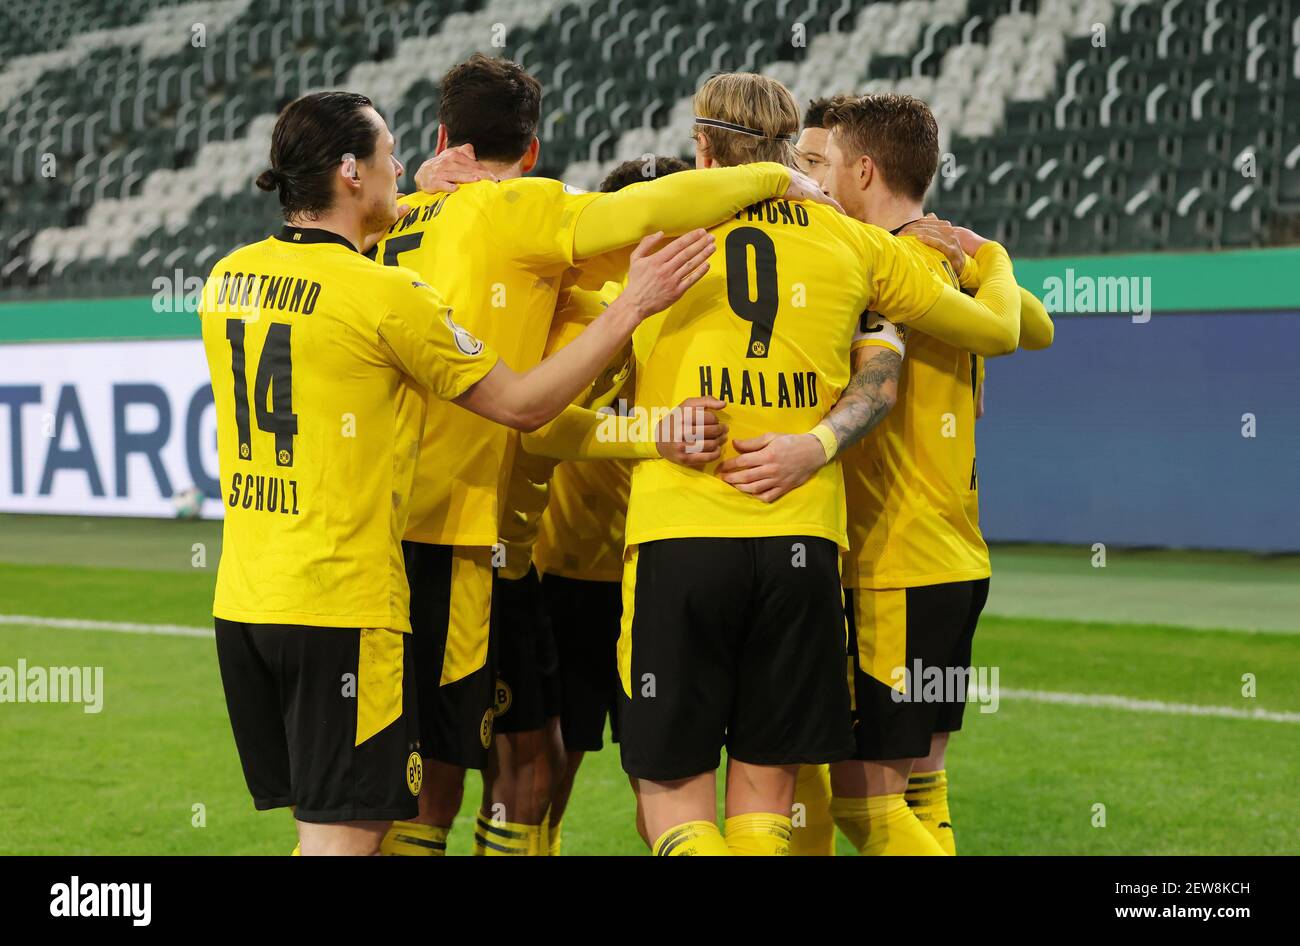 firo: 02.03.2021, Fuvuball: Soccer: DFB-Pokal, quarter finals, season 2020/21  Borussia Mv? nchengladbach, Gladbach -